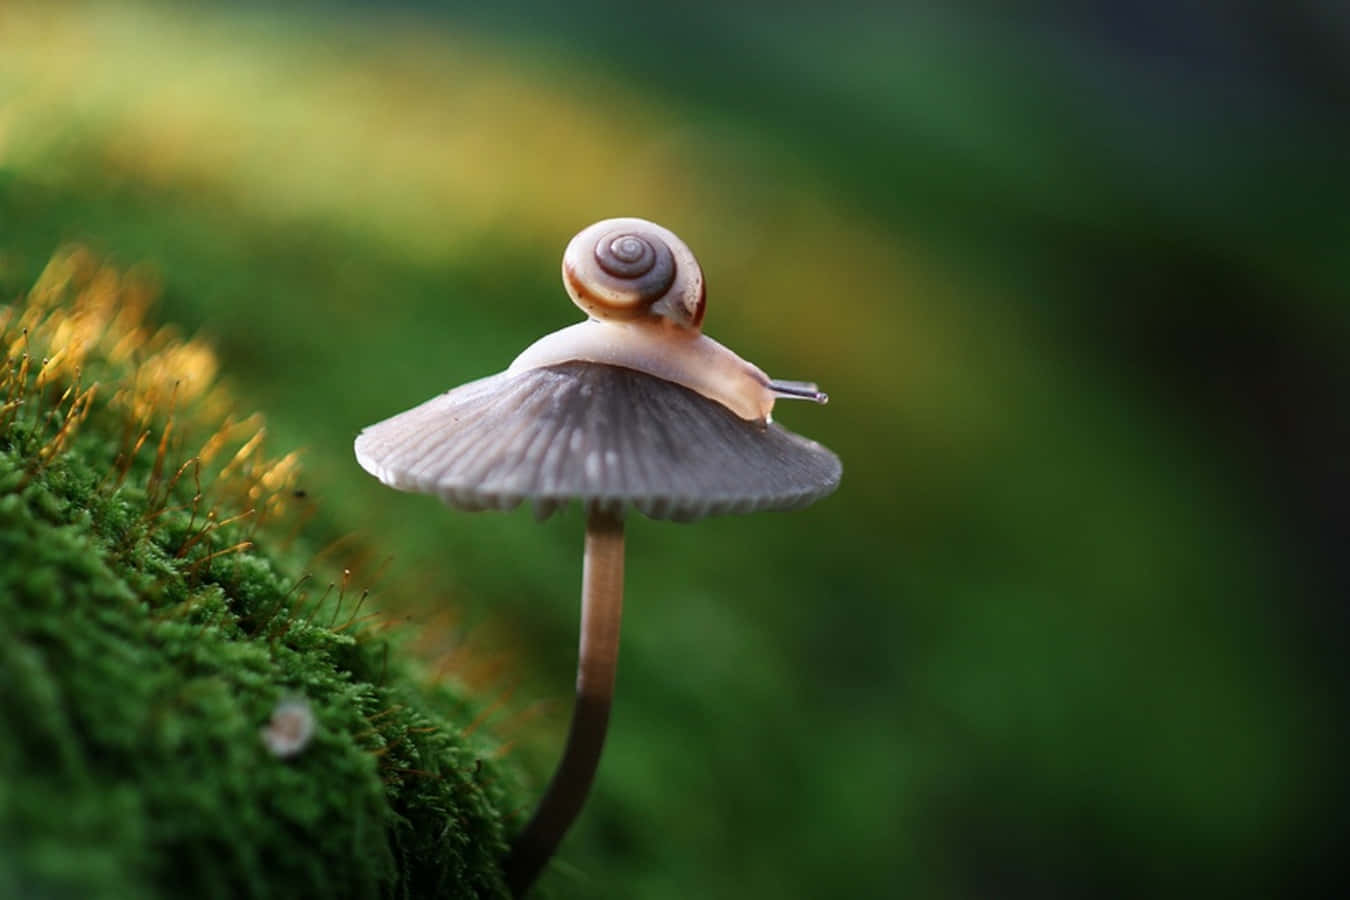 Snail On Mushroom Interesting Pictures